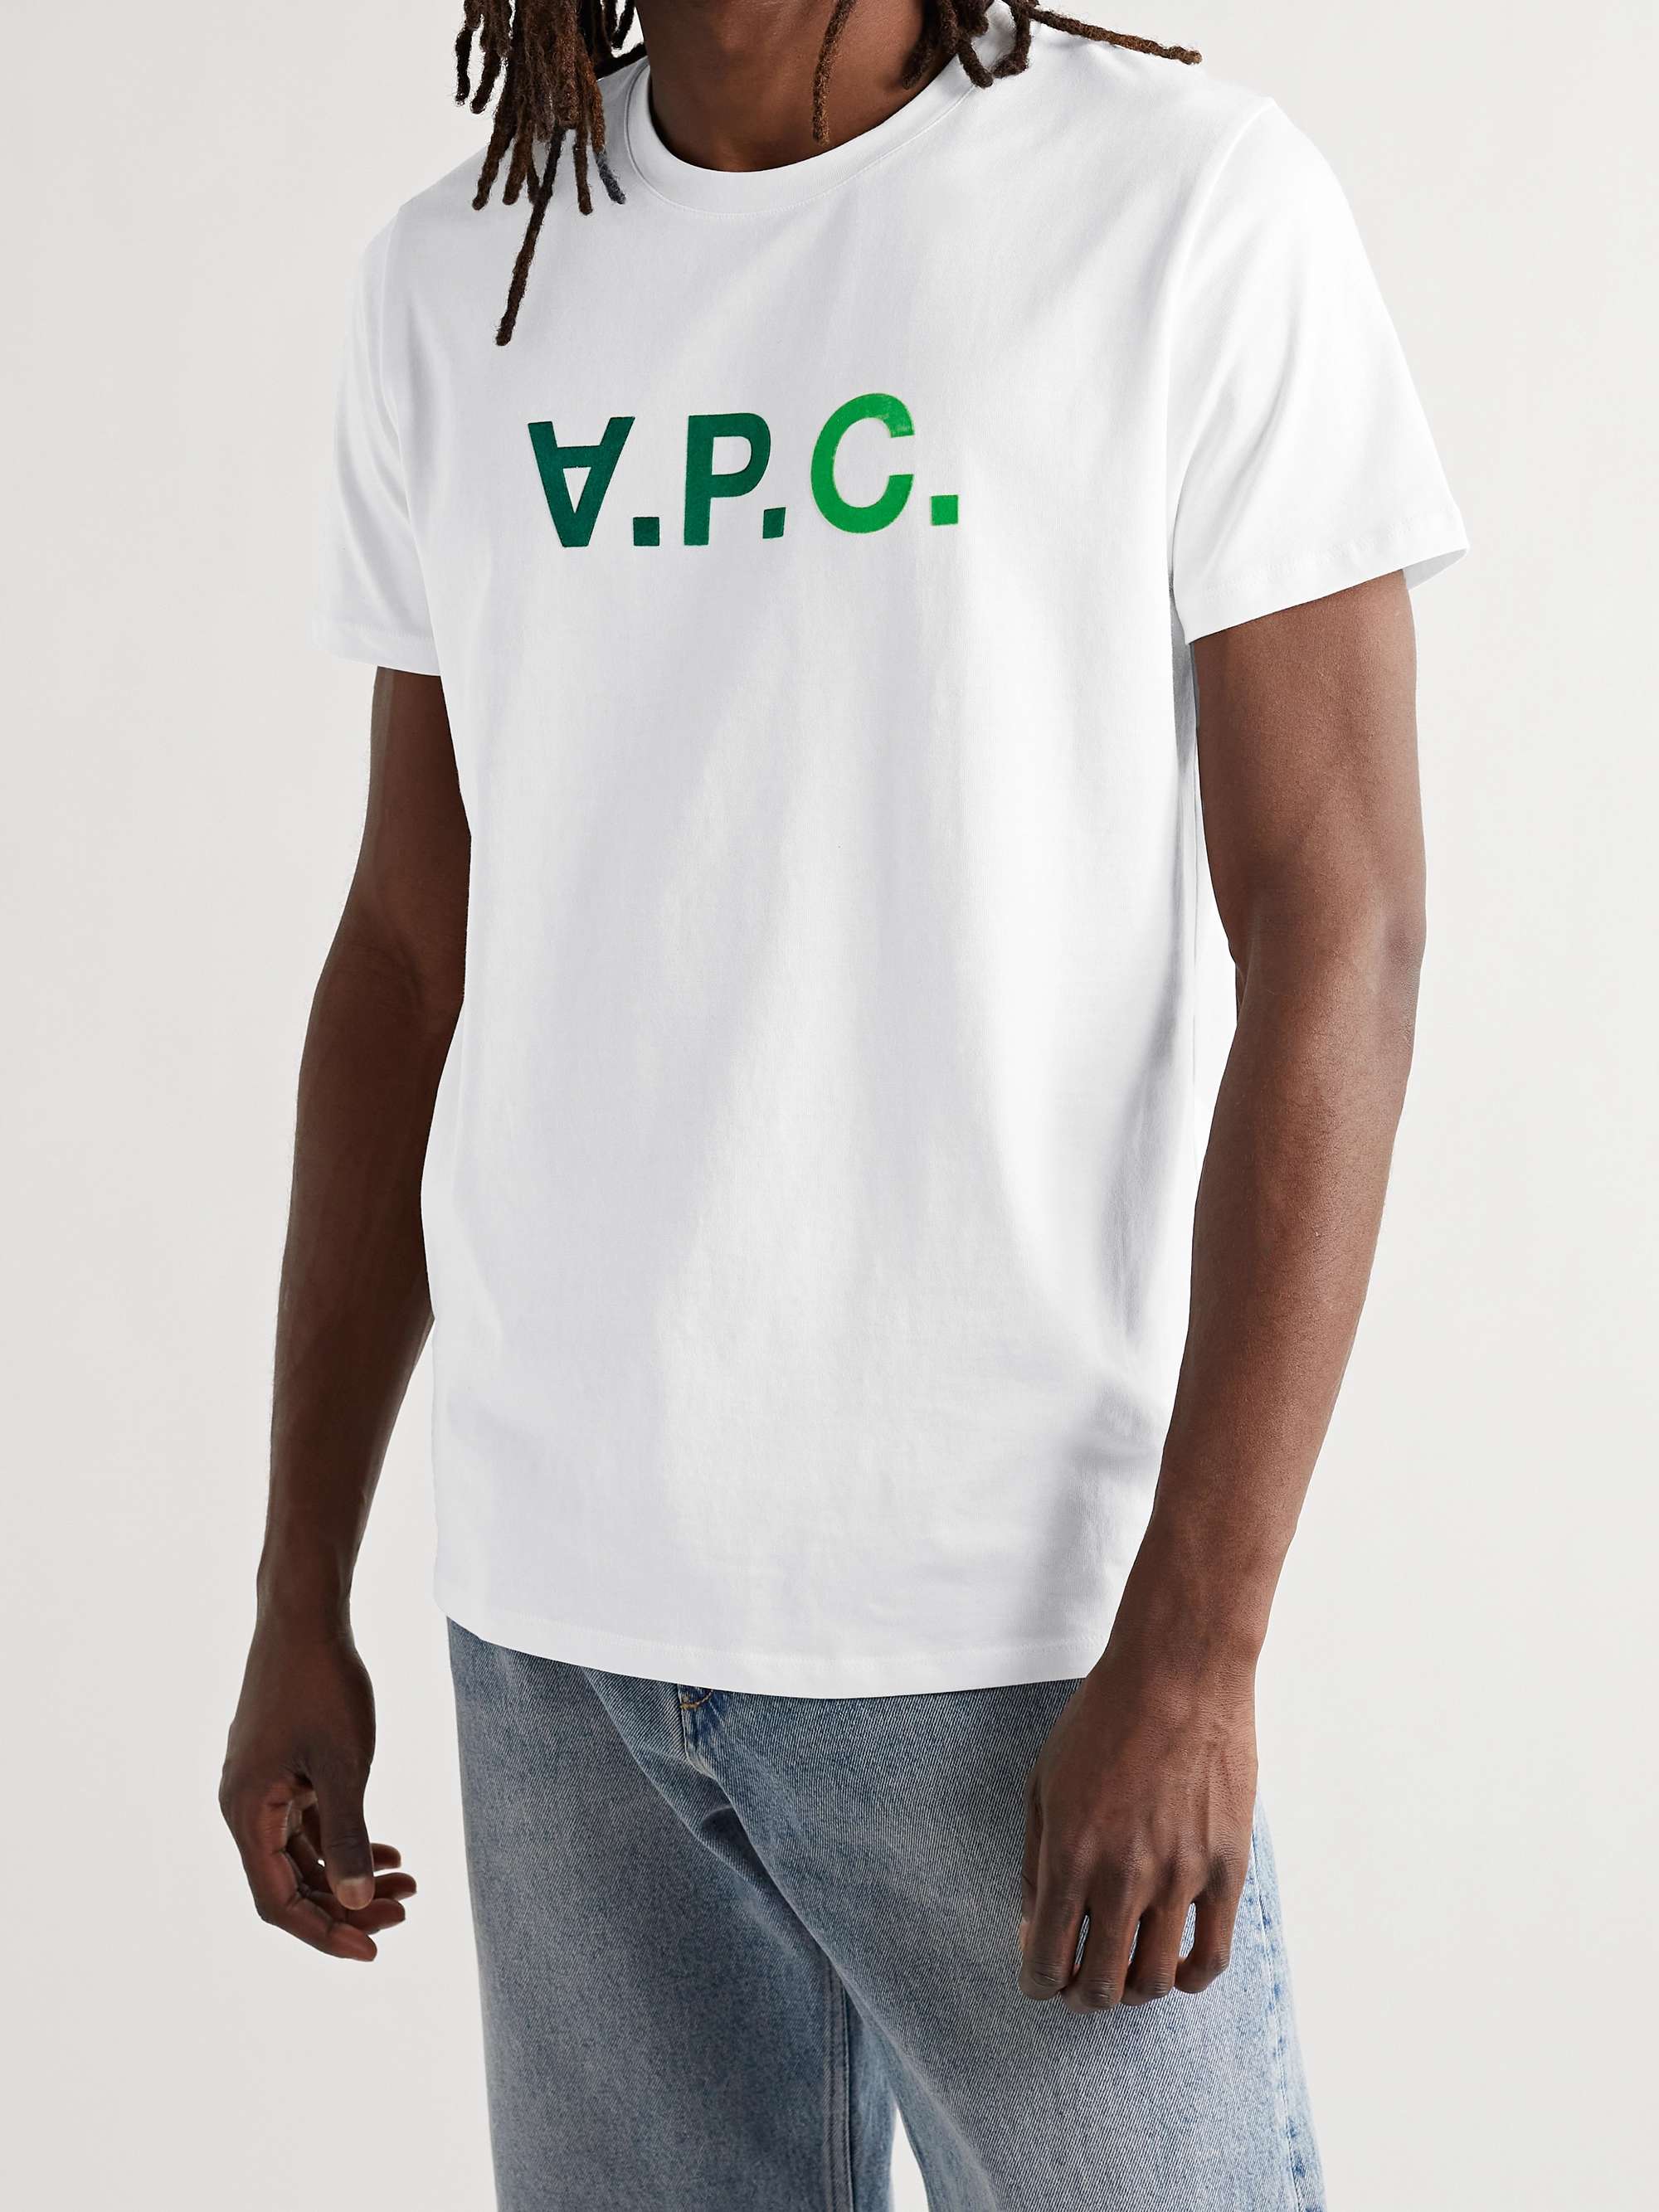 A.P.C. VPC Logo-Flocked Cotton-Jersey T-Shirt